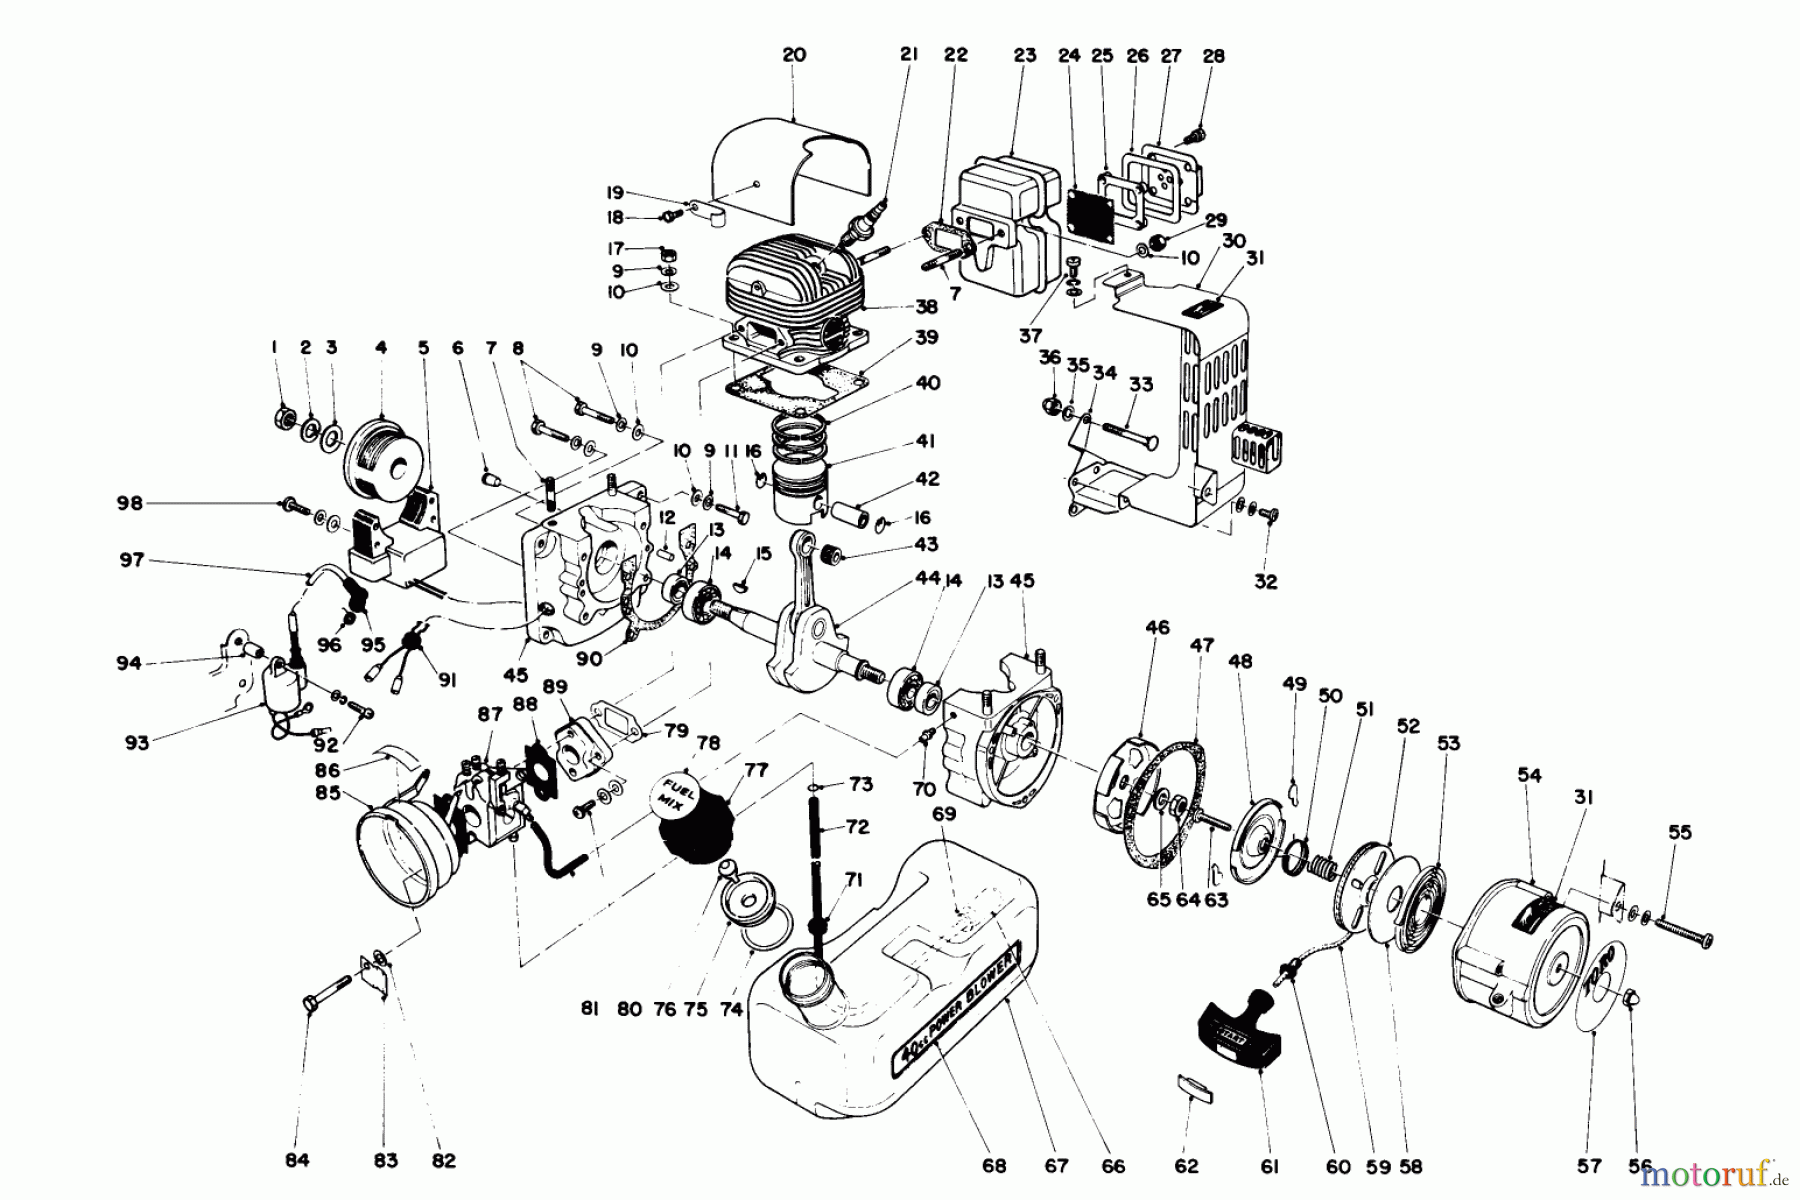  Laubbläser / Laubsauger 30940 - Toro 40cc Back Pack Blower (SN: 4000001 - 4999999) (1984) ENGINE ASSEMBLY